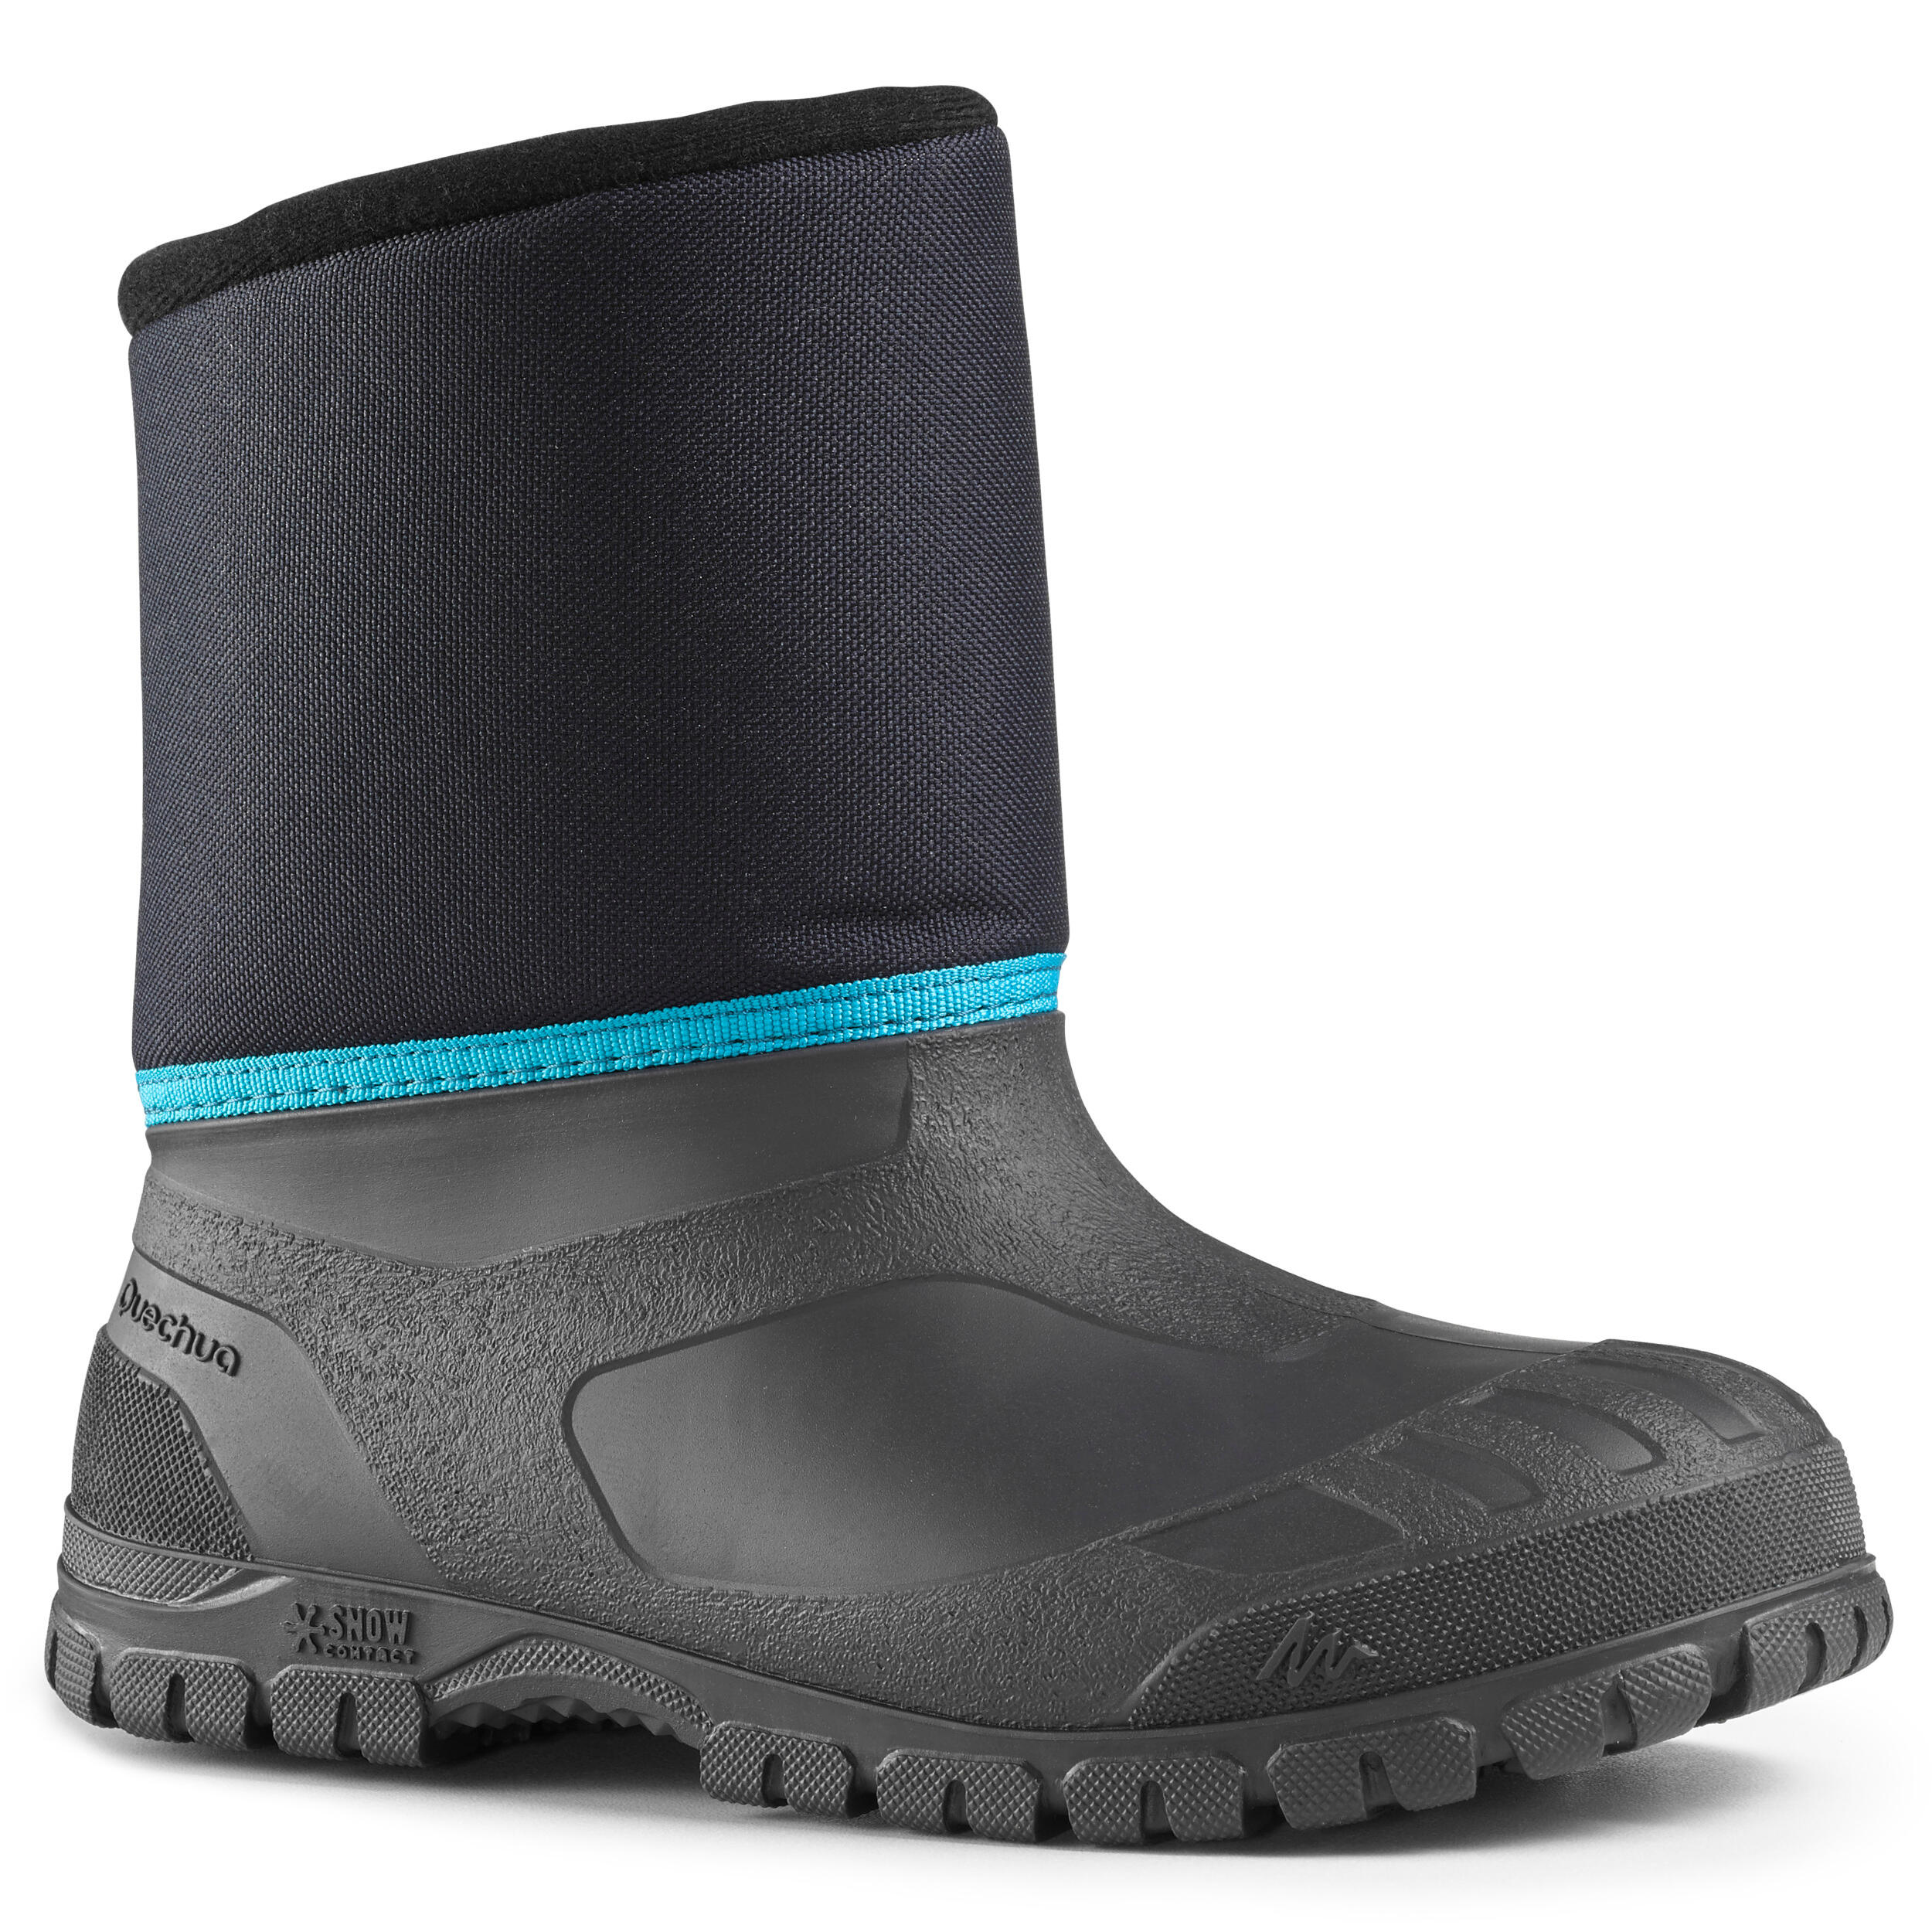 warm waterproof snow boots